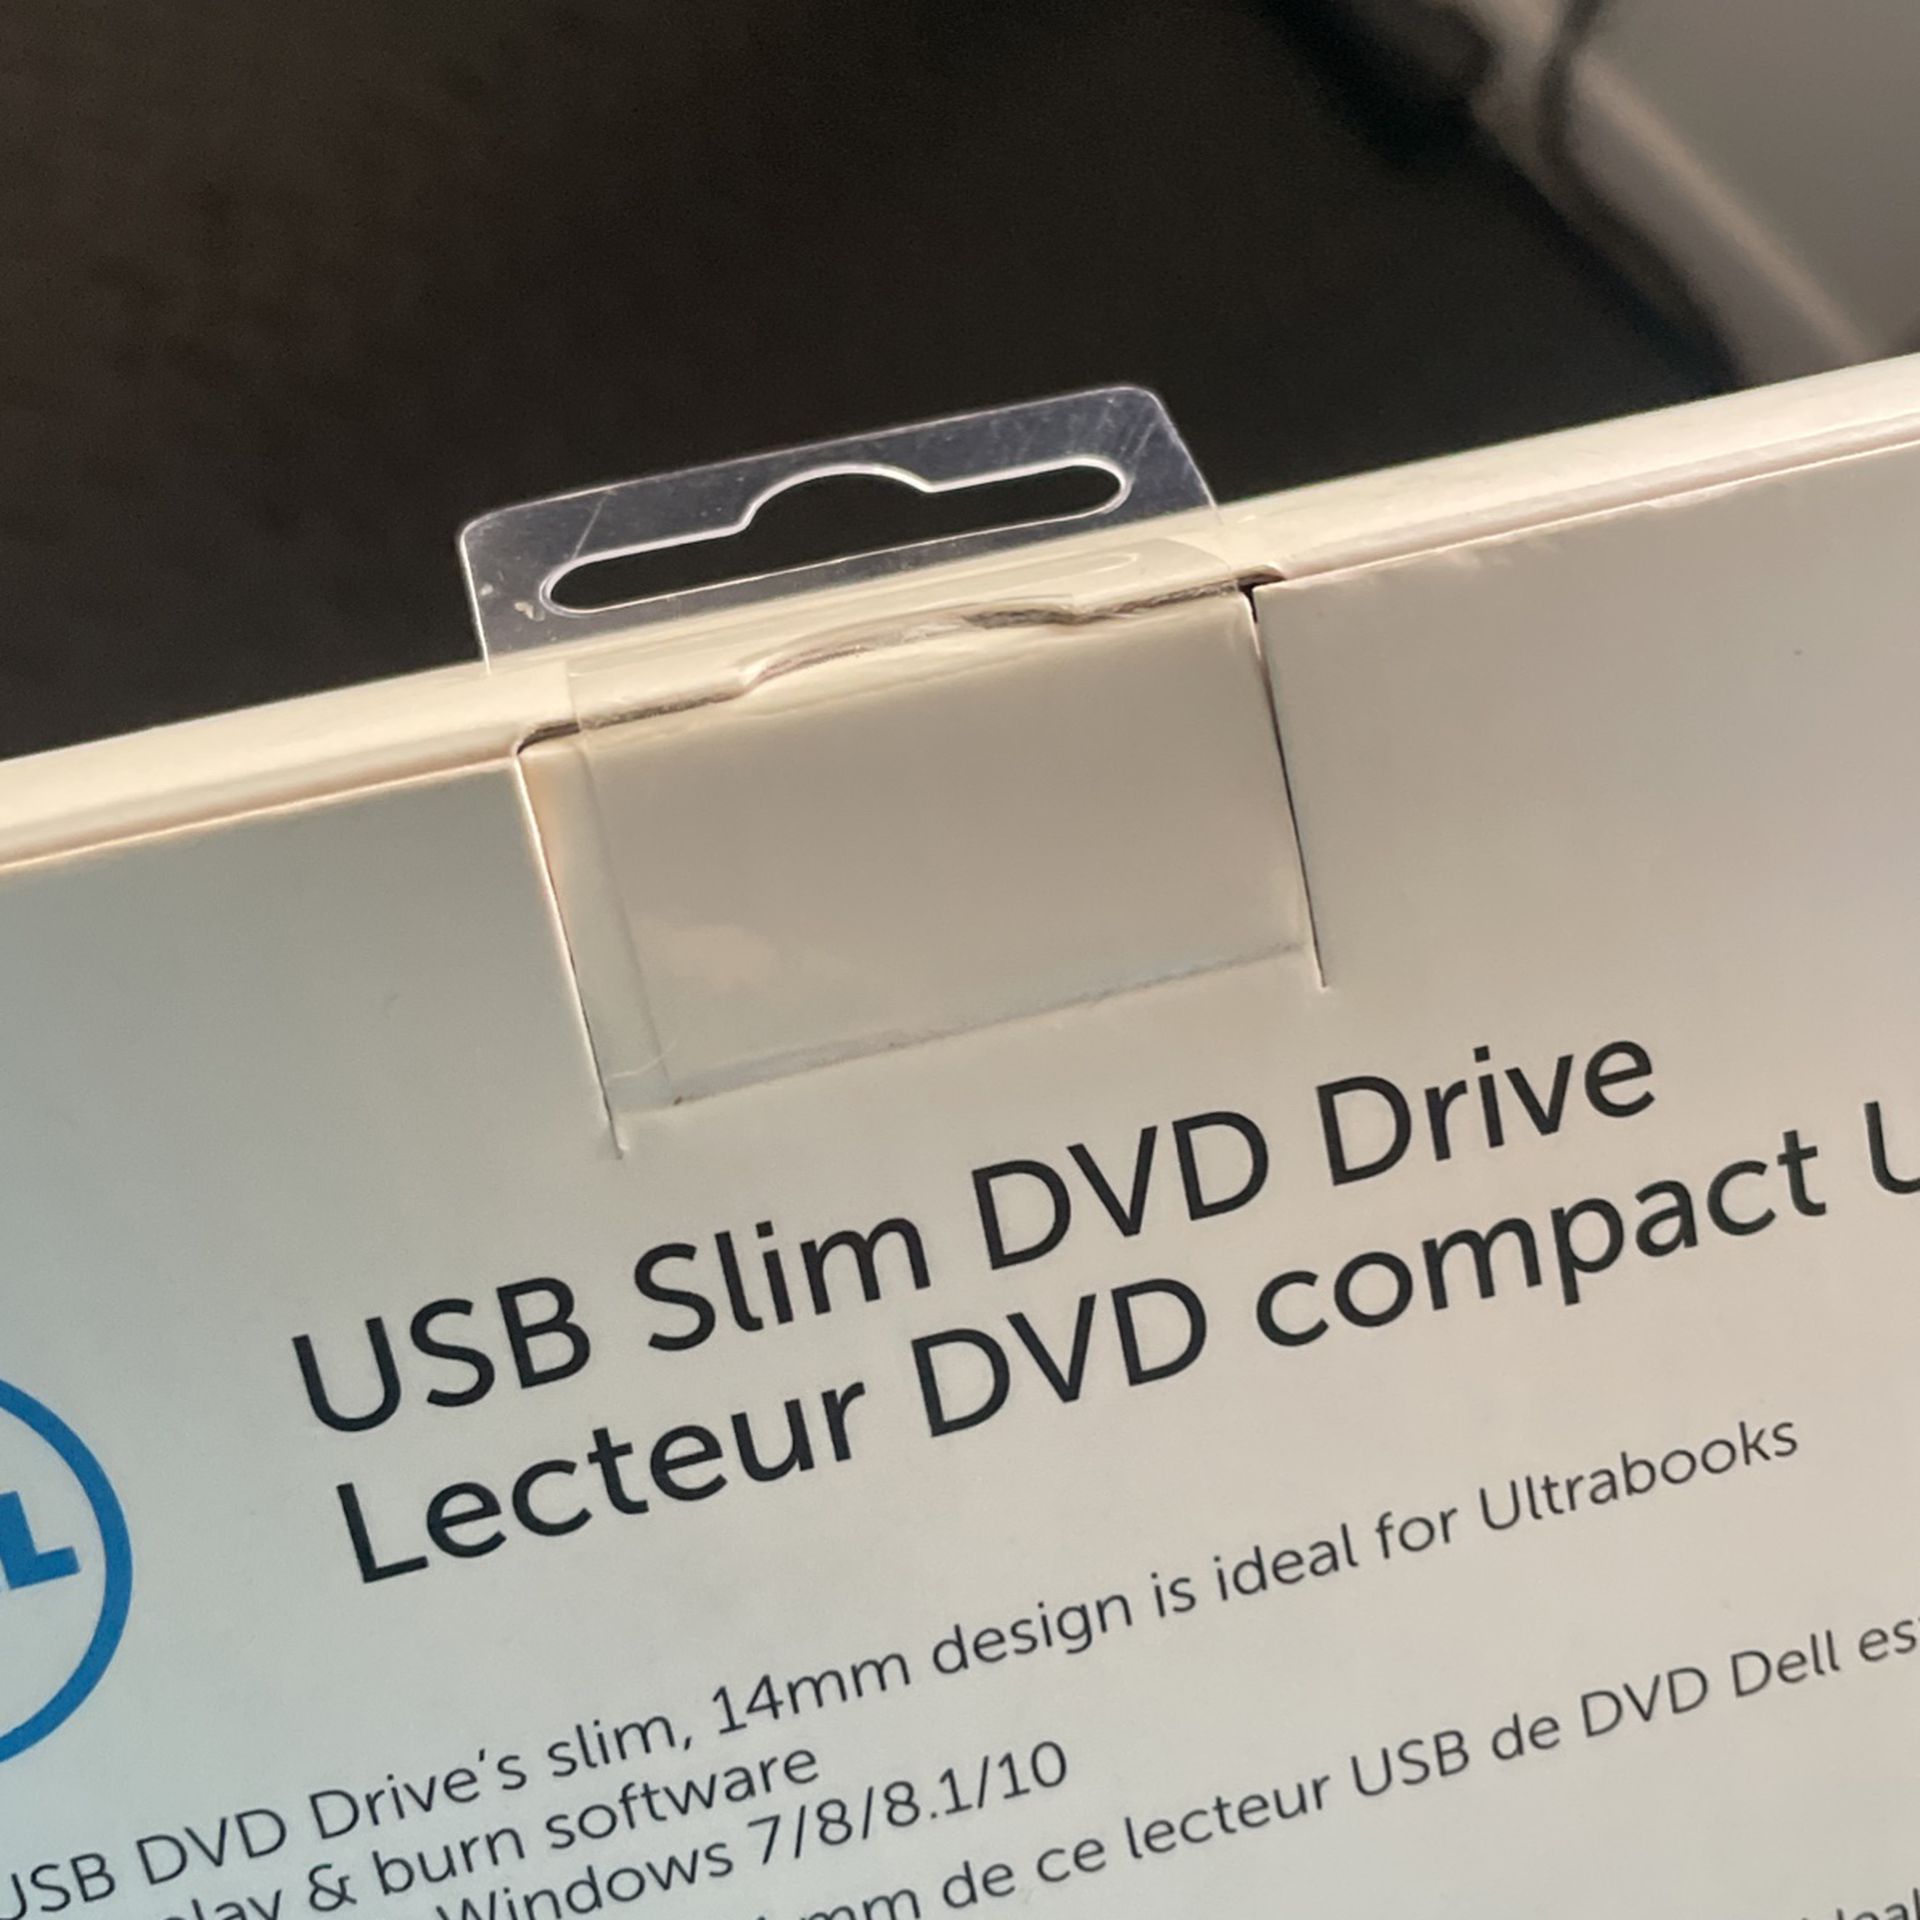 USB slim dvd drive lecteur dvd drive compact usb dvd rw dell new